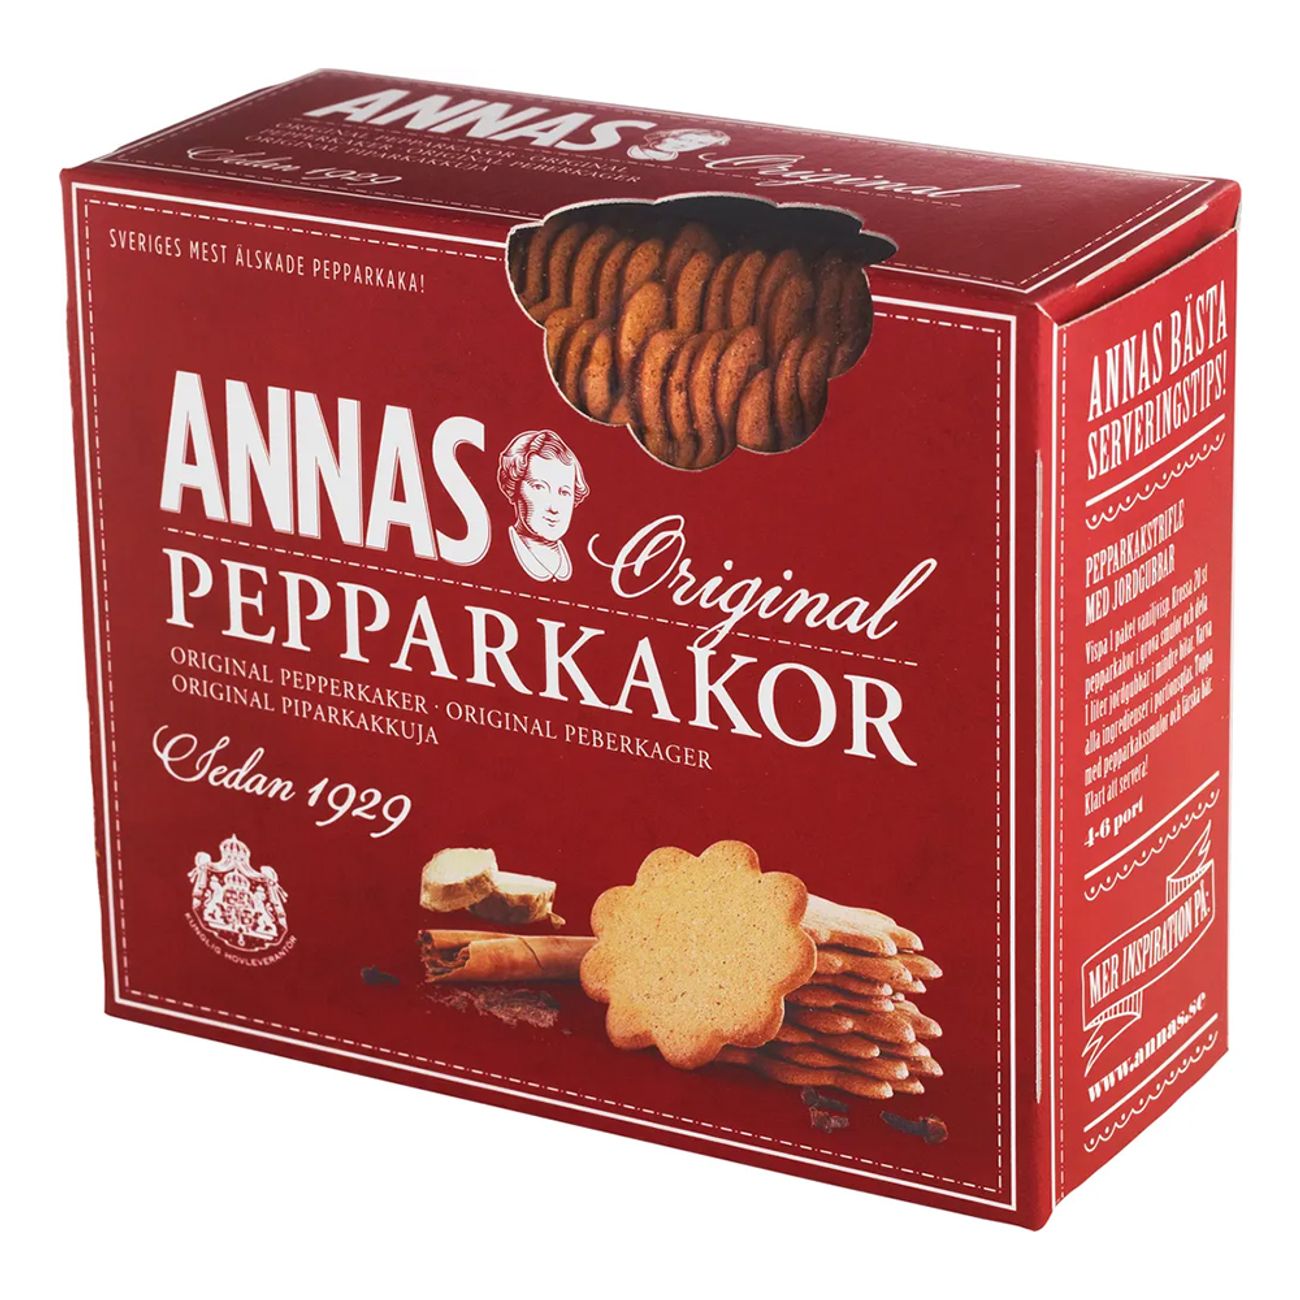 annas-original-pepparkakor-99550-1